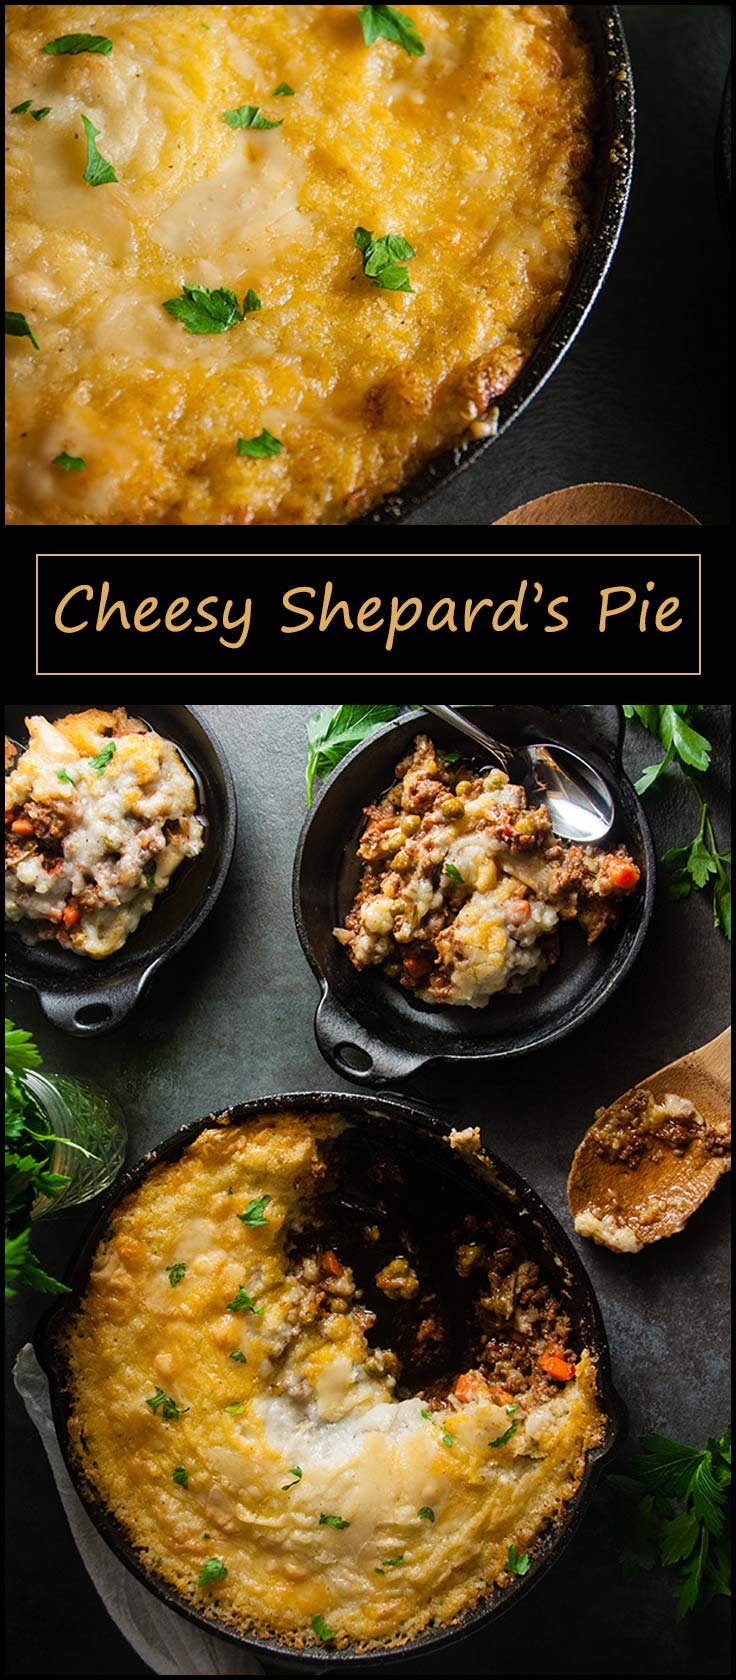 Cheesy Shepard's Pie from www.seasonedsprinkles.com